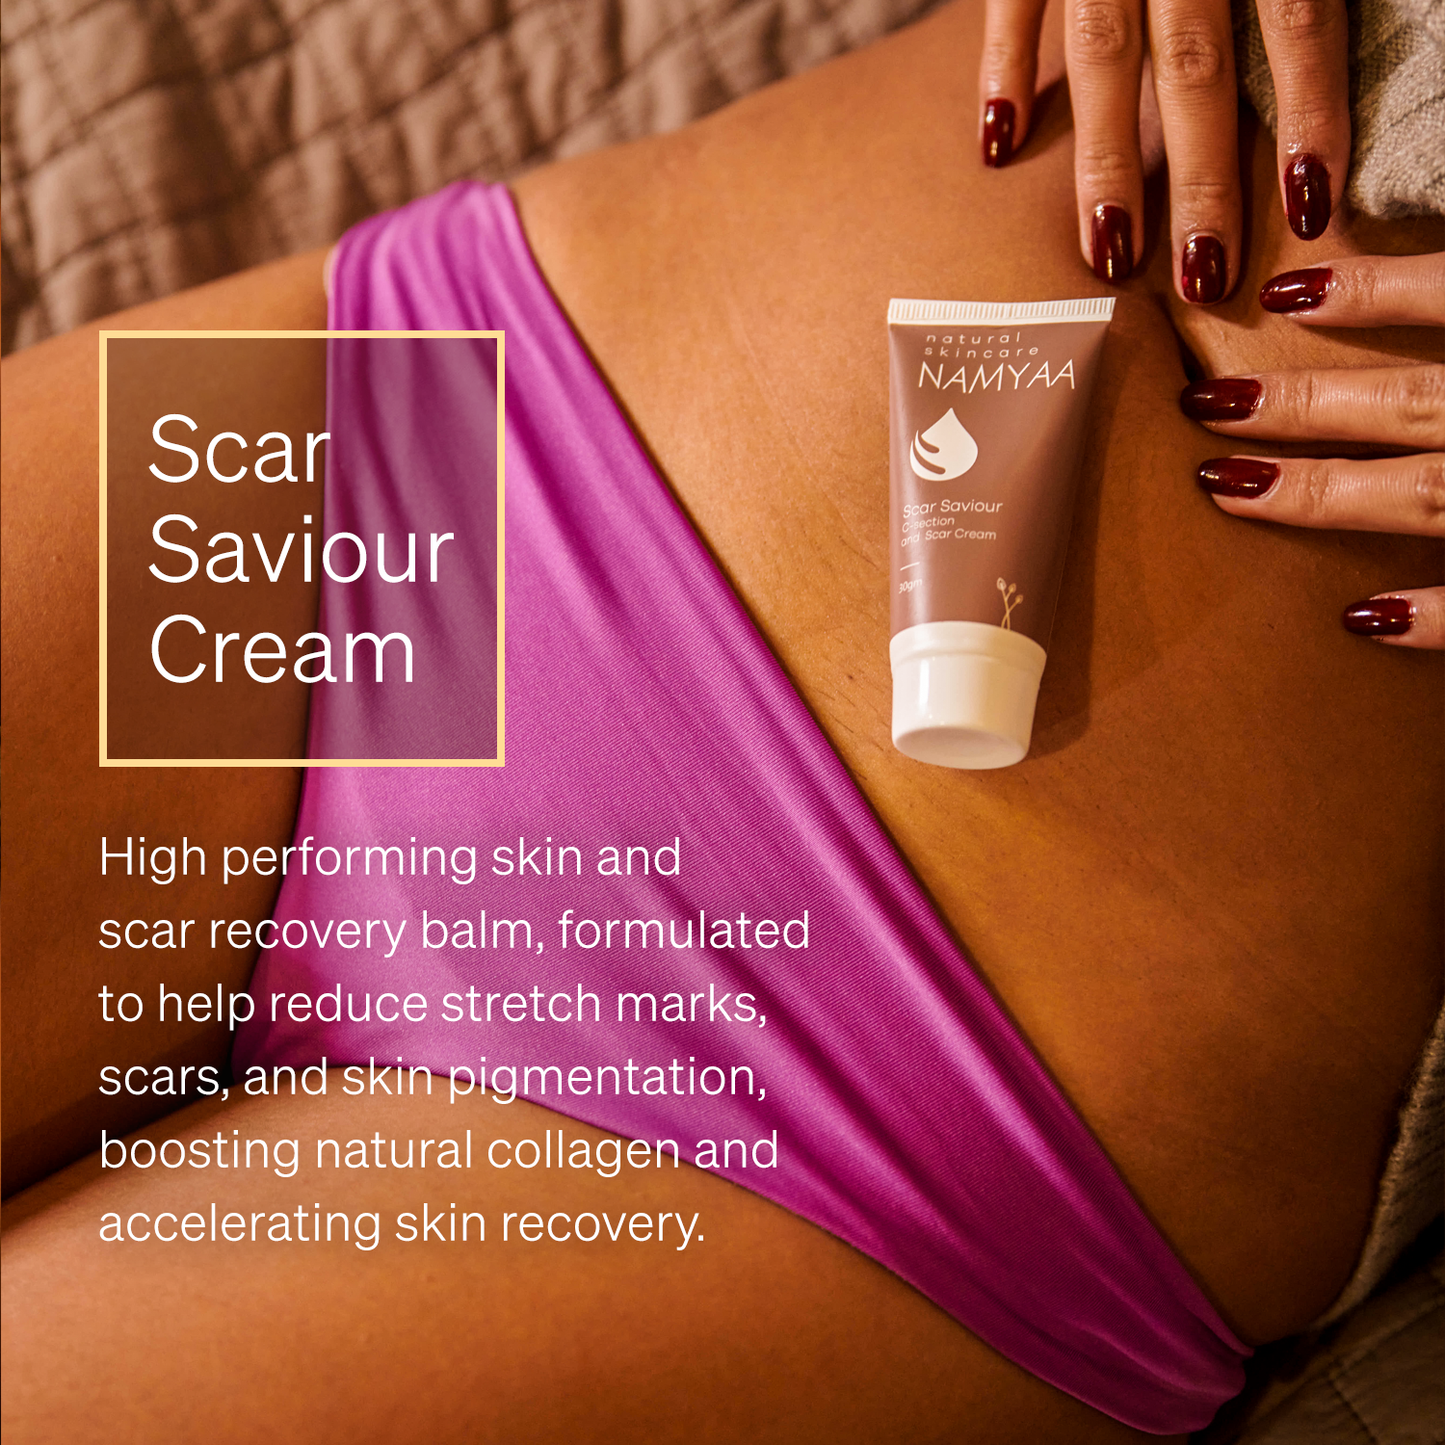 Scar Saviour Cream 30g